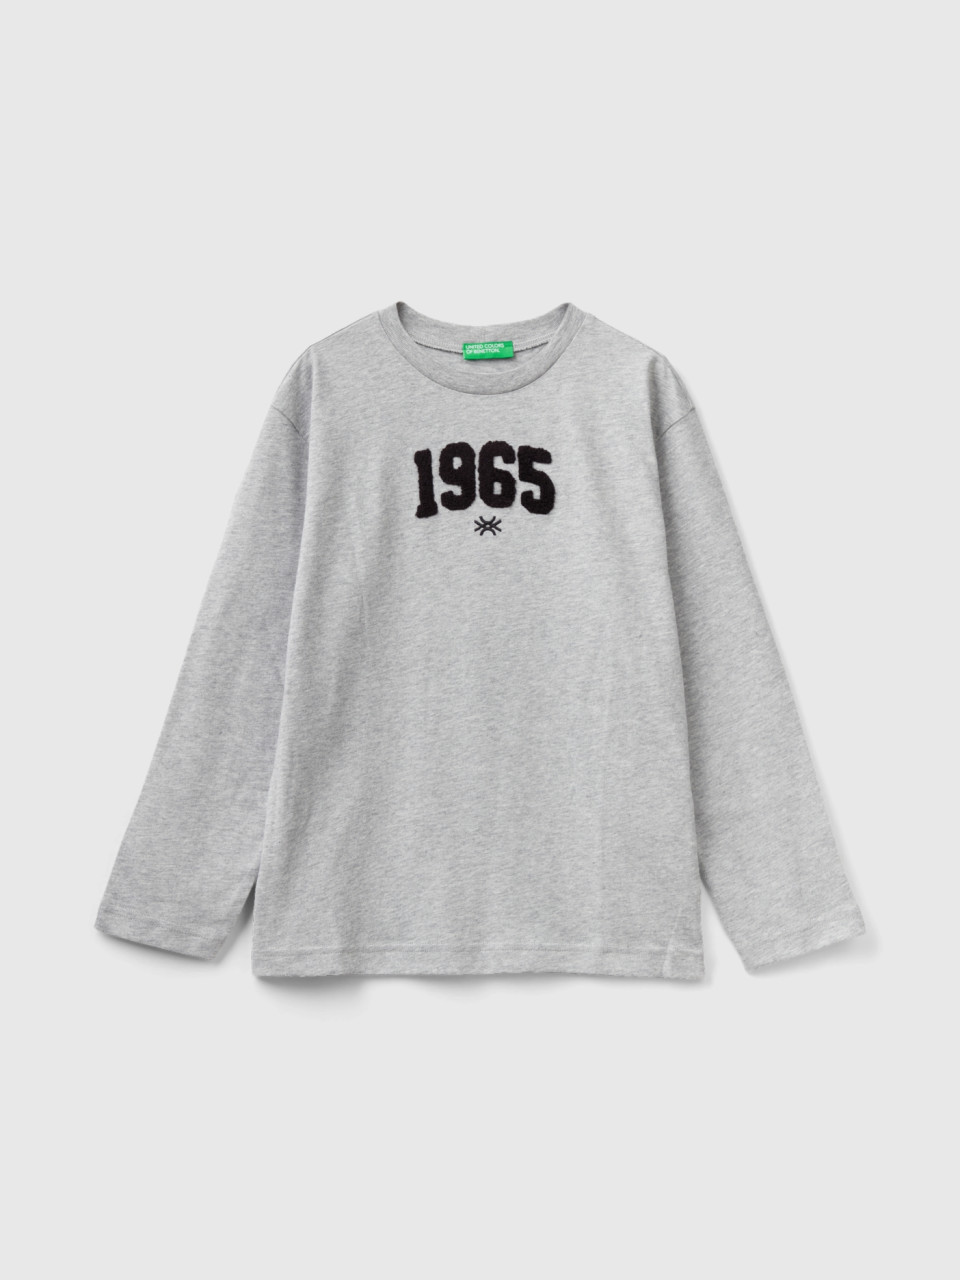 Benetton, Warm 100% Organic Cotton T-shirt, Gray, Kids